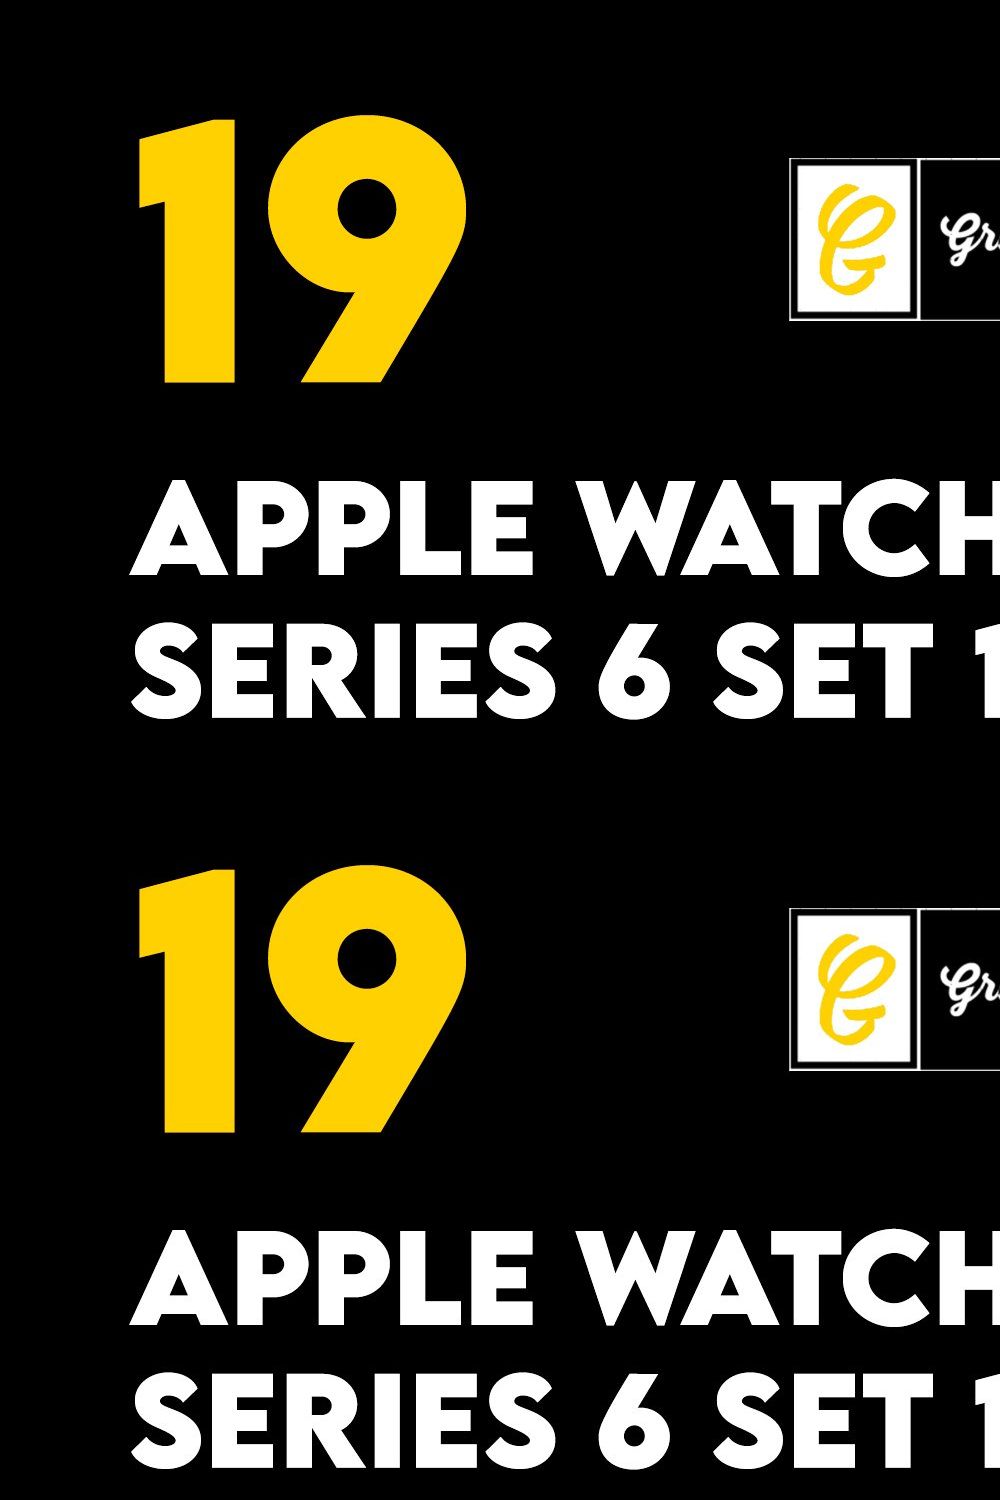 Apple Watch Series 6 mockup set 1 pinterest preview image.